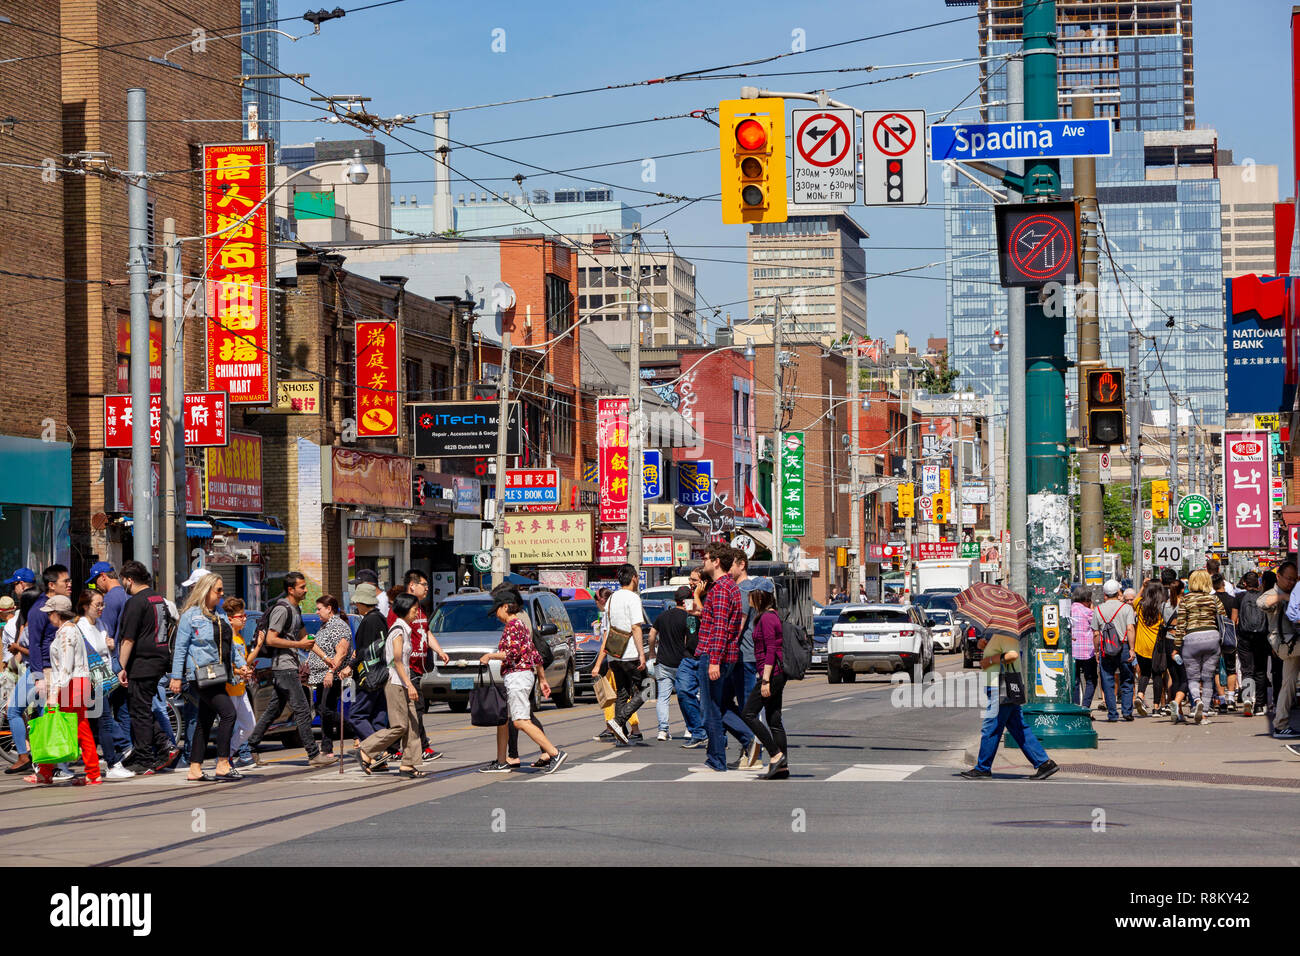 Canada, Province of Ontario, City of Toronto, Chinatown, Spadina Avenue, crosswalk Stock Photo